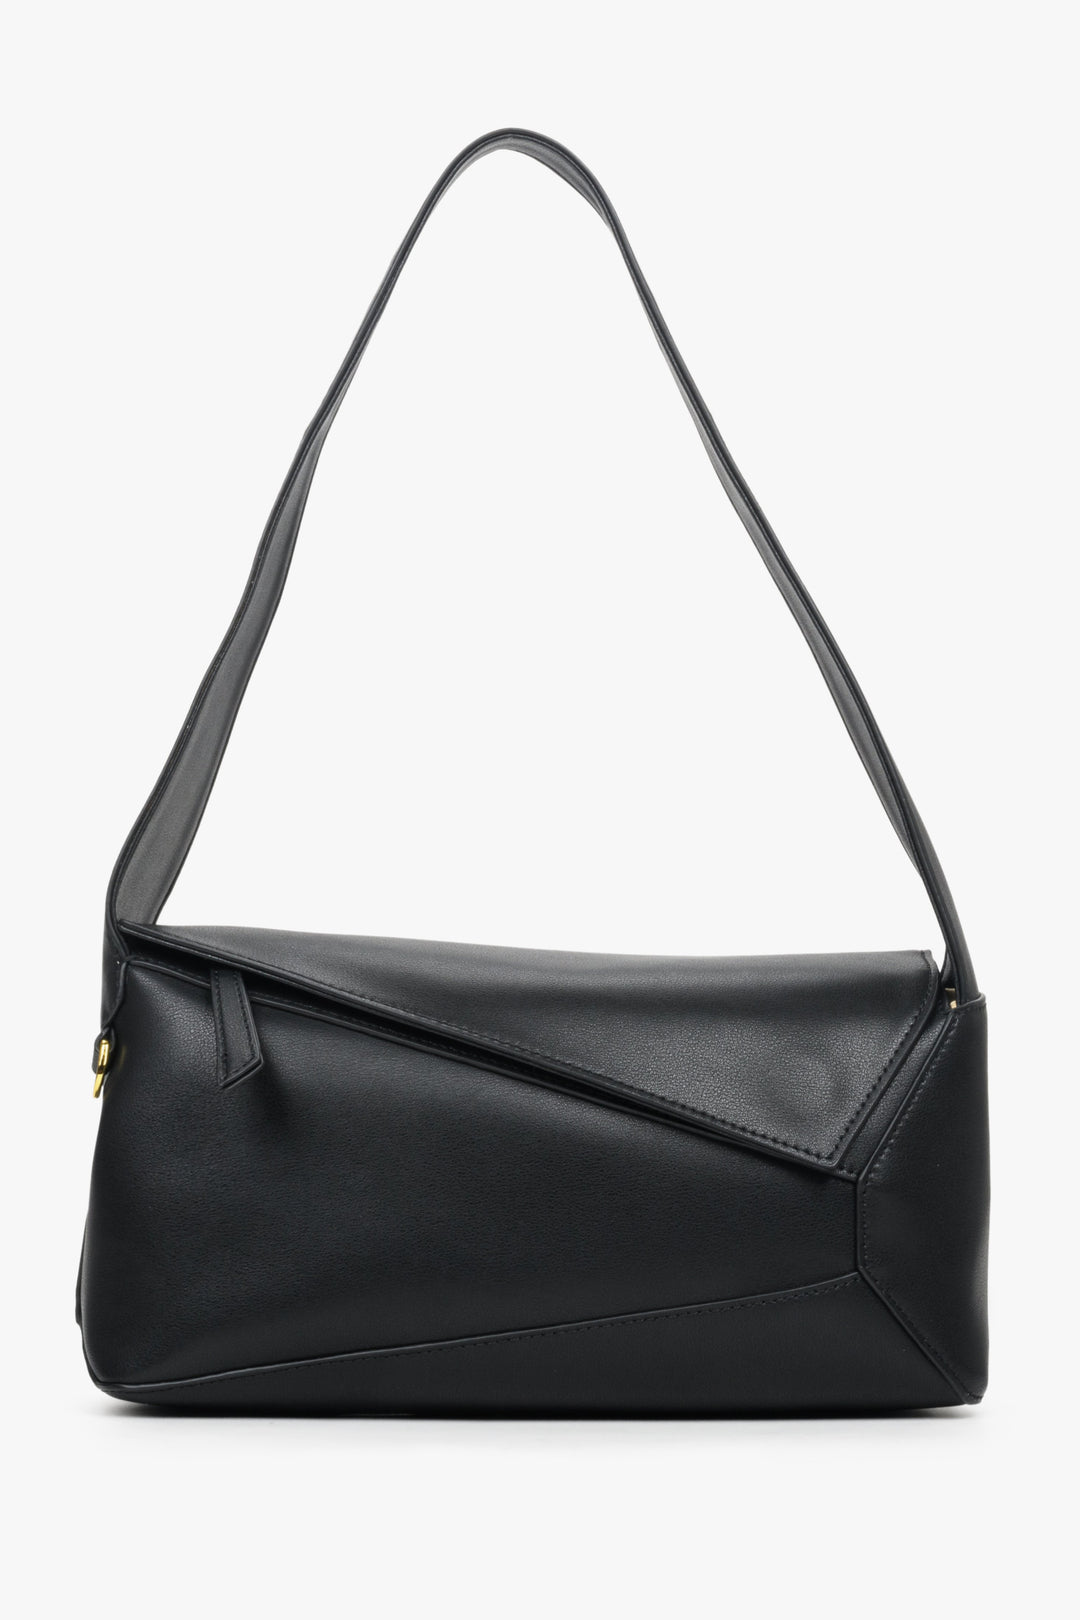 Women's small black handbag made of genuine leather by Estro.